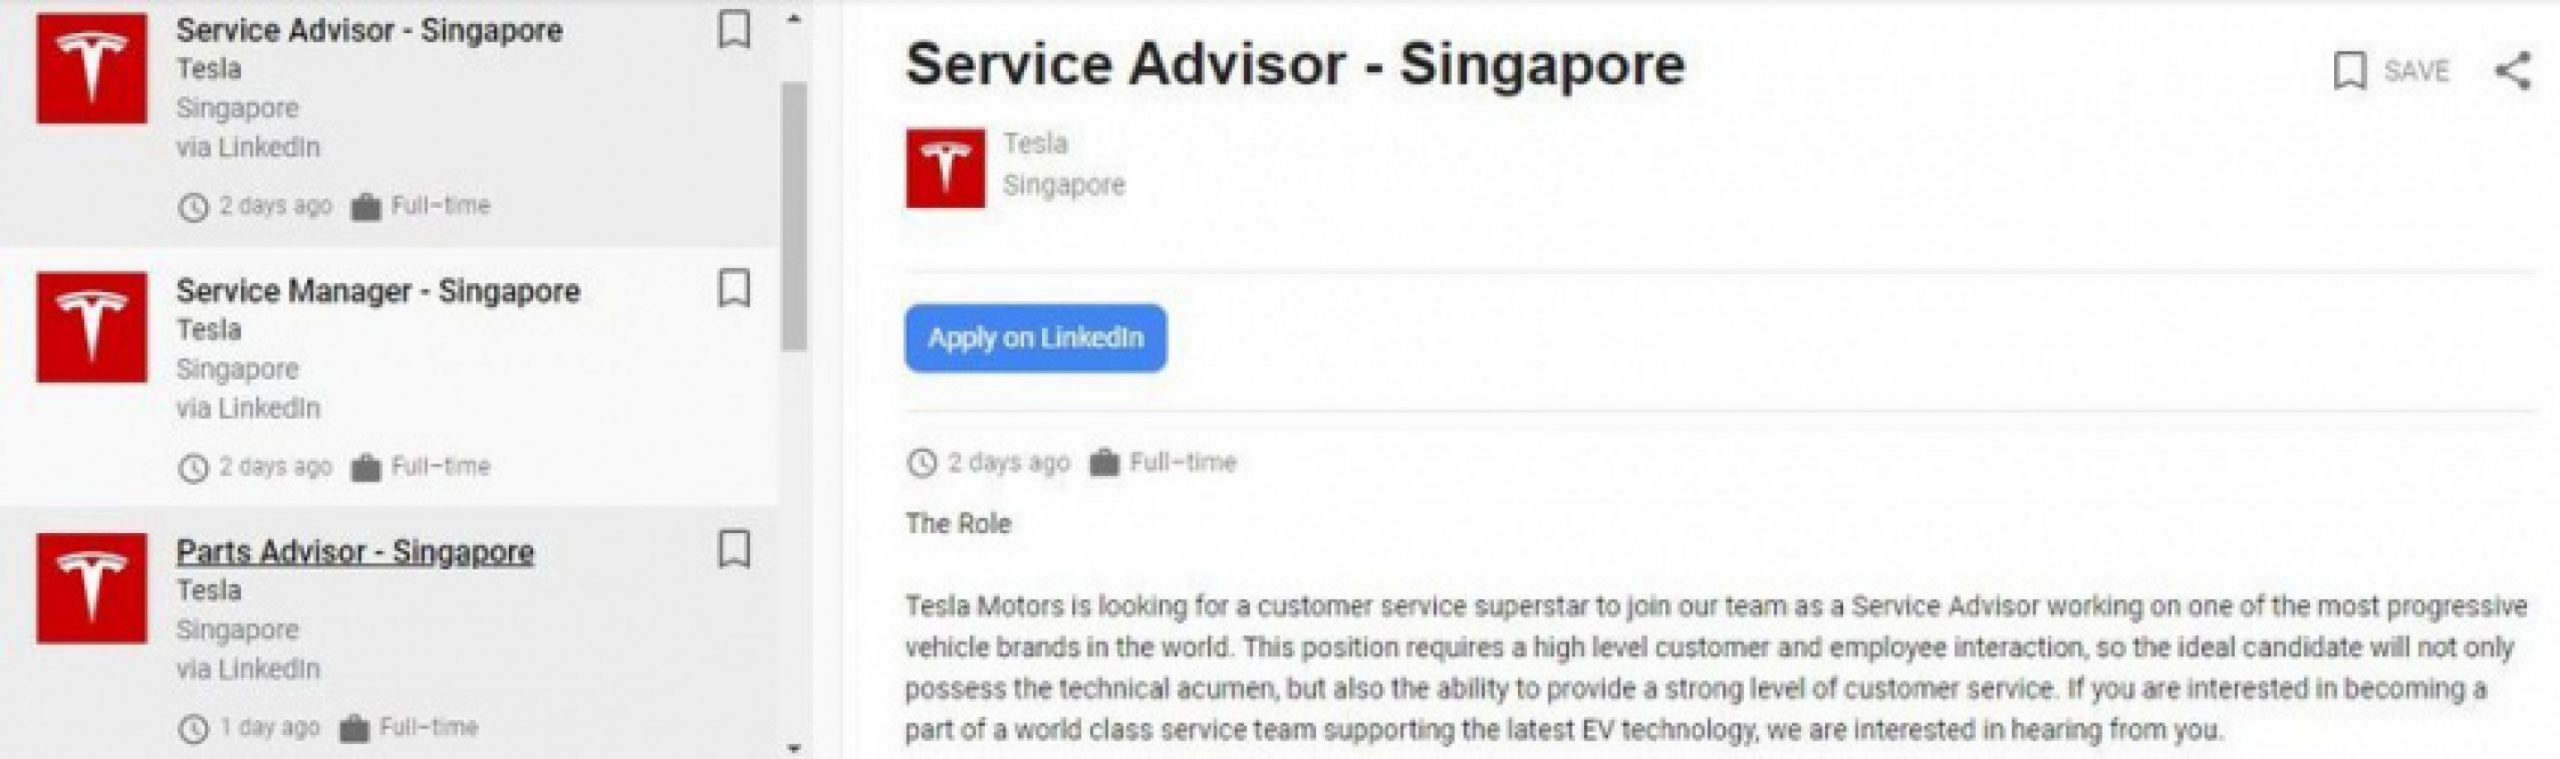 autos, cars, reviews, tesla, insights, singapore, tesla jobs, tesla hiring in singapore: what could tesla's job postings in singapore mean?